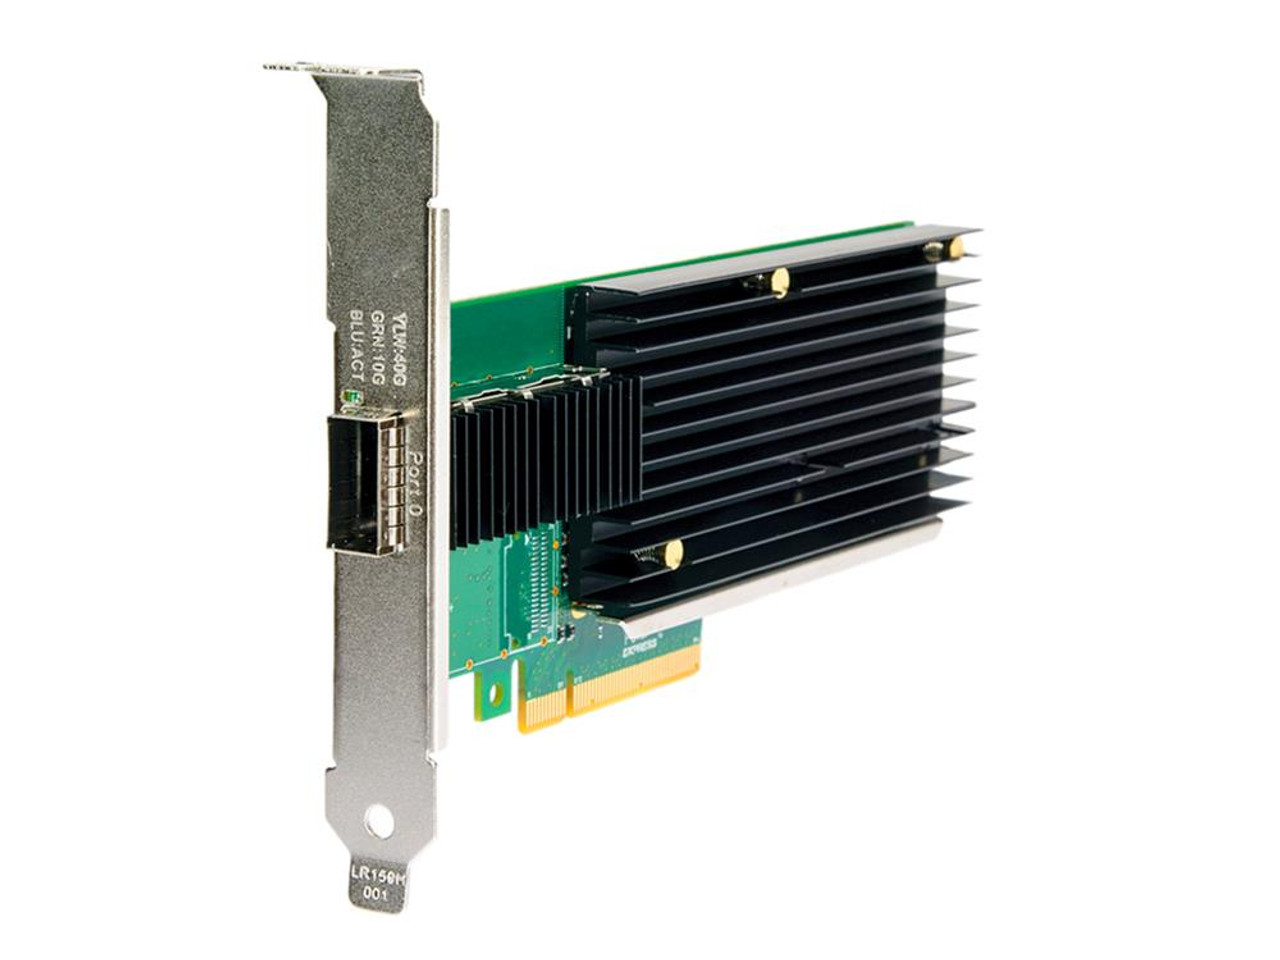 XL710QDA1-AX Axiom 40GBS SINGLE PORT QSFP+ PCIE 3.0 X8 NIC CARD FOR INTEL - XL710QDA1